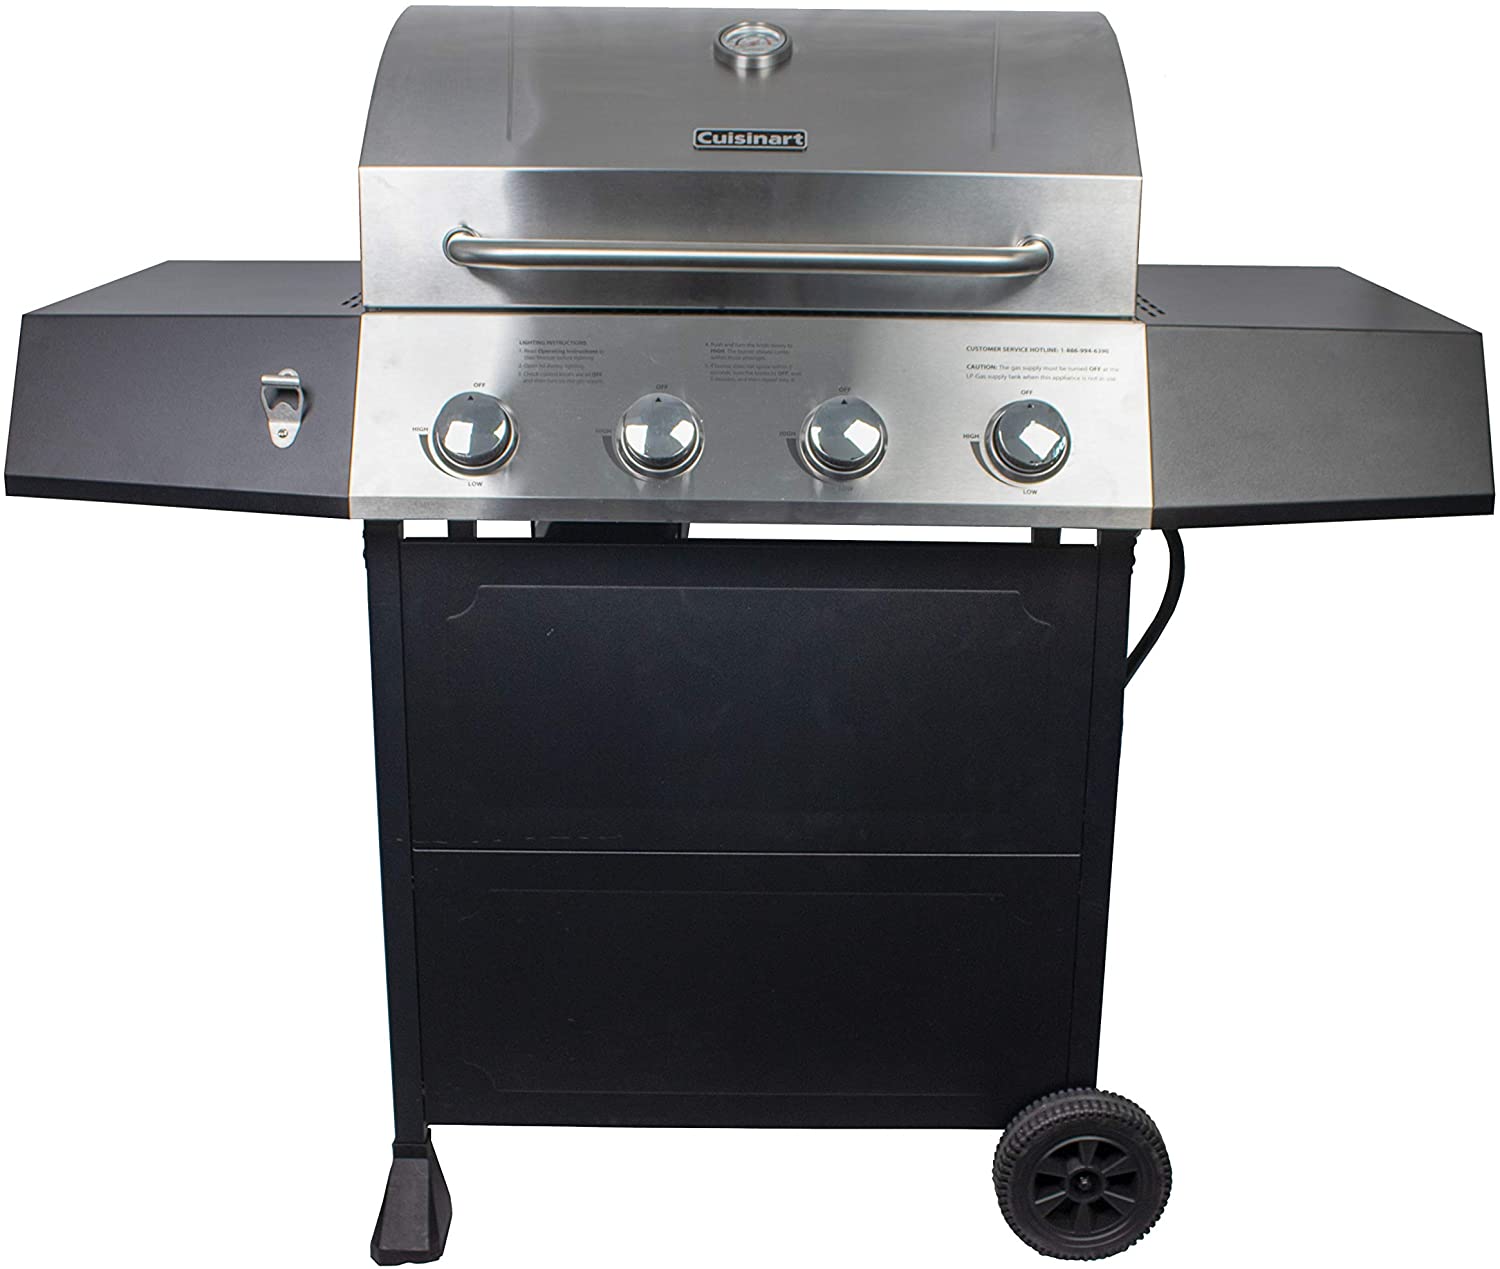 Cuisinart Cgg 7400 Propane, 54 Inch, Full Size Four Burner Gas Grill